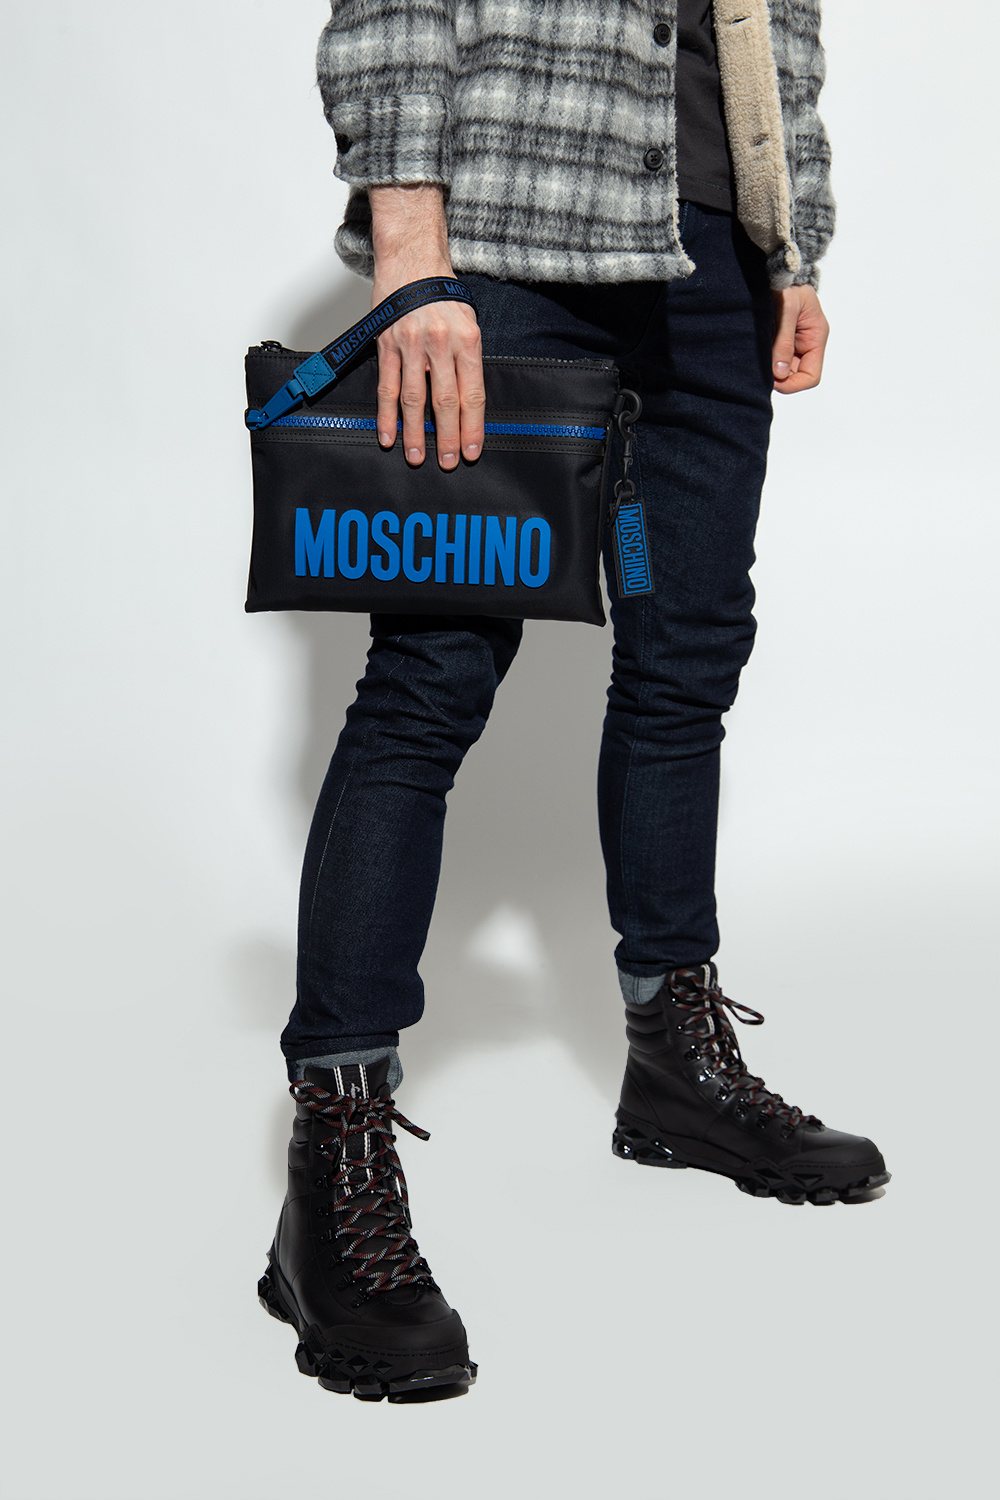 Moschino buy roccobarocco alchechengi backpack